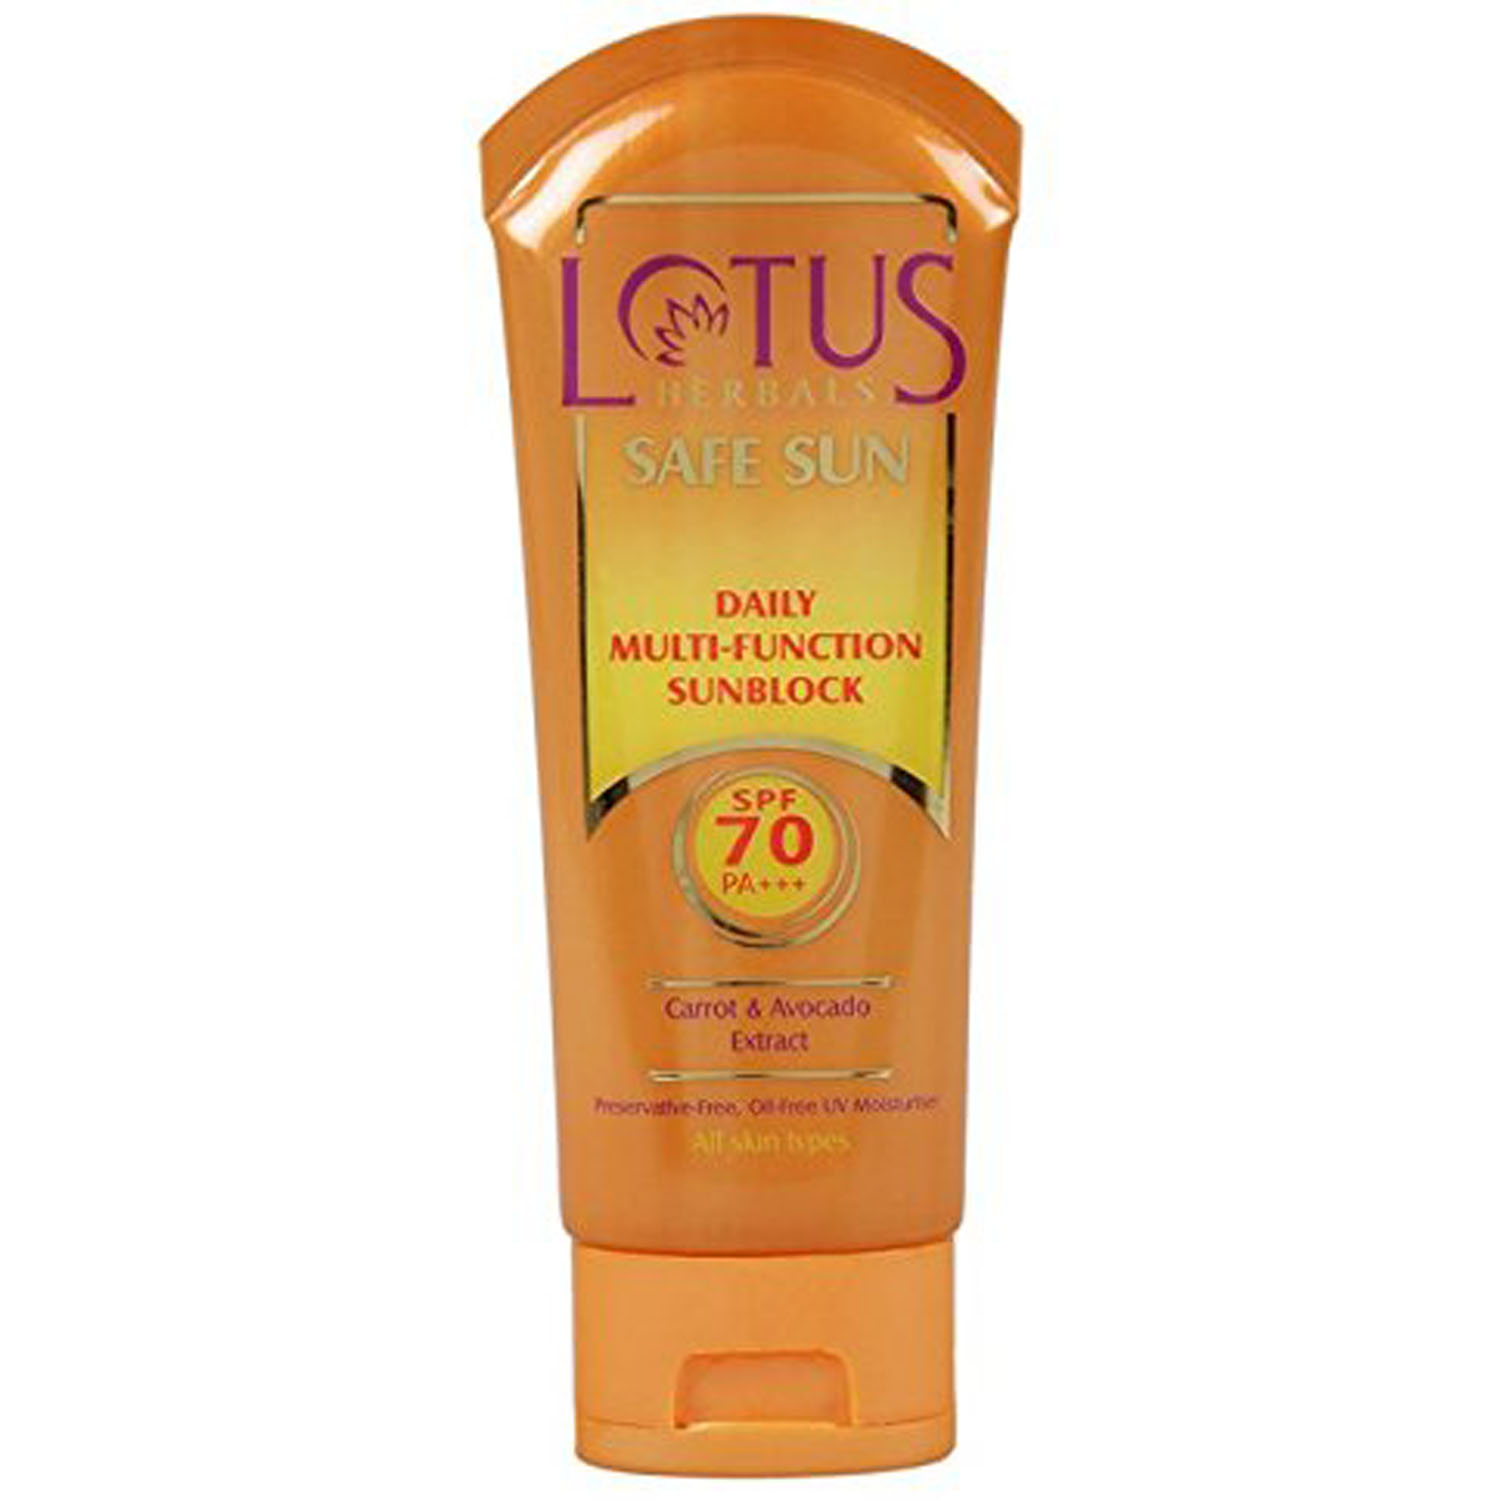 Lotus Herbals Safe Sun Daily Multi-Function SunBlock Cream SPF 70 PA+++, 60 gm, Pack of 1 